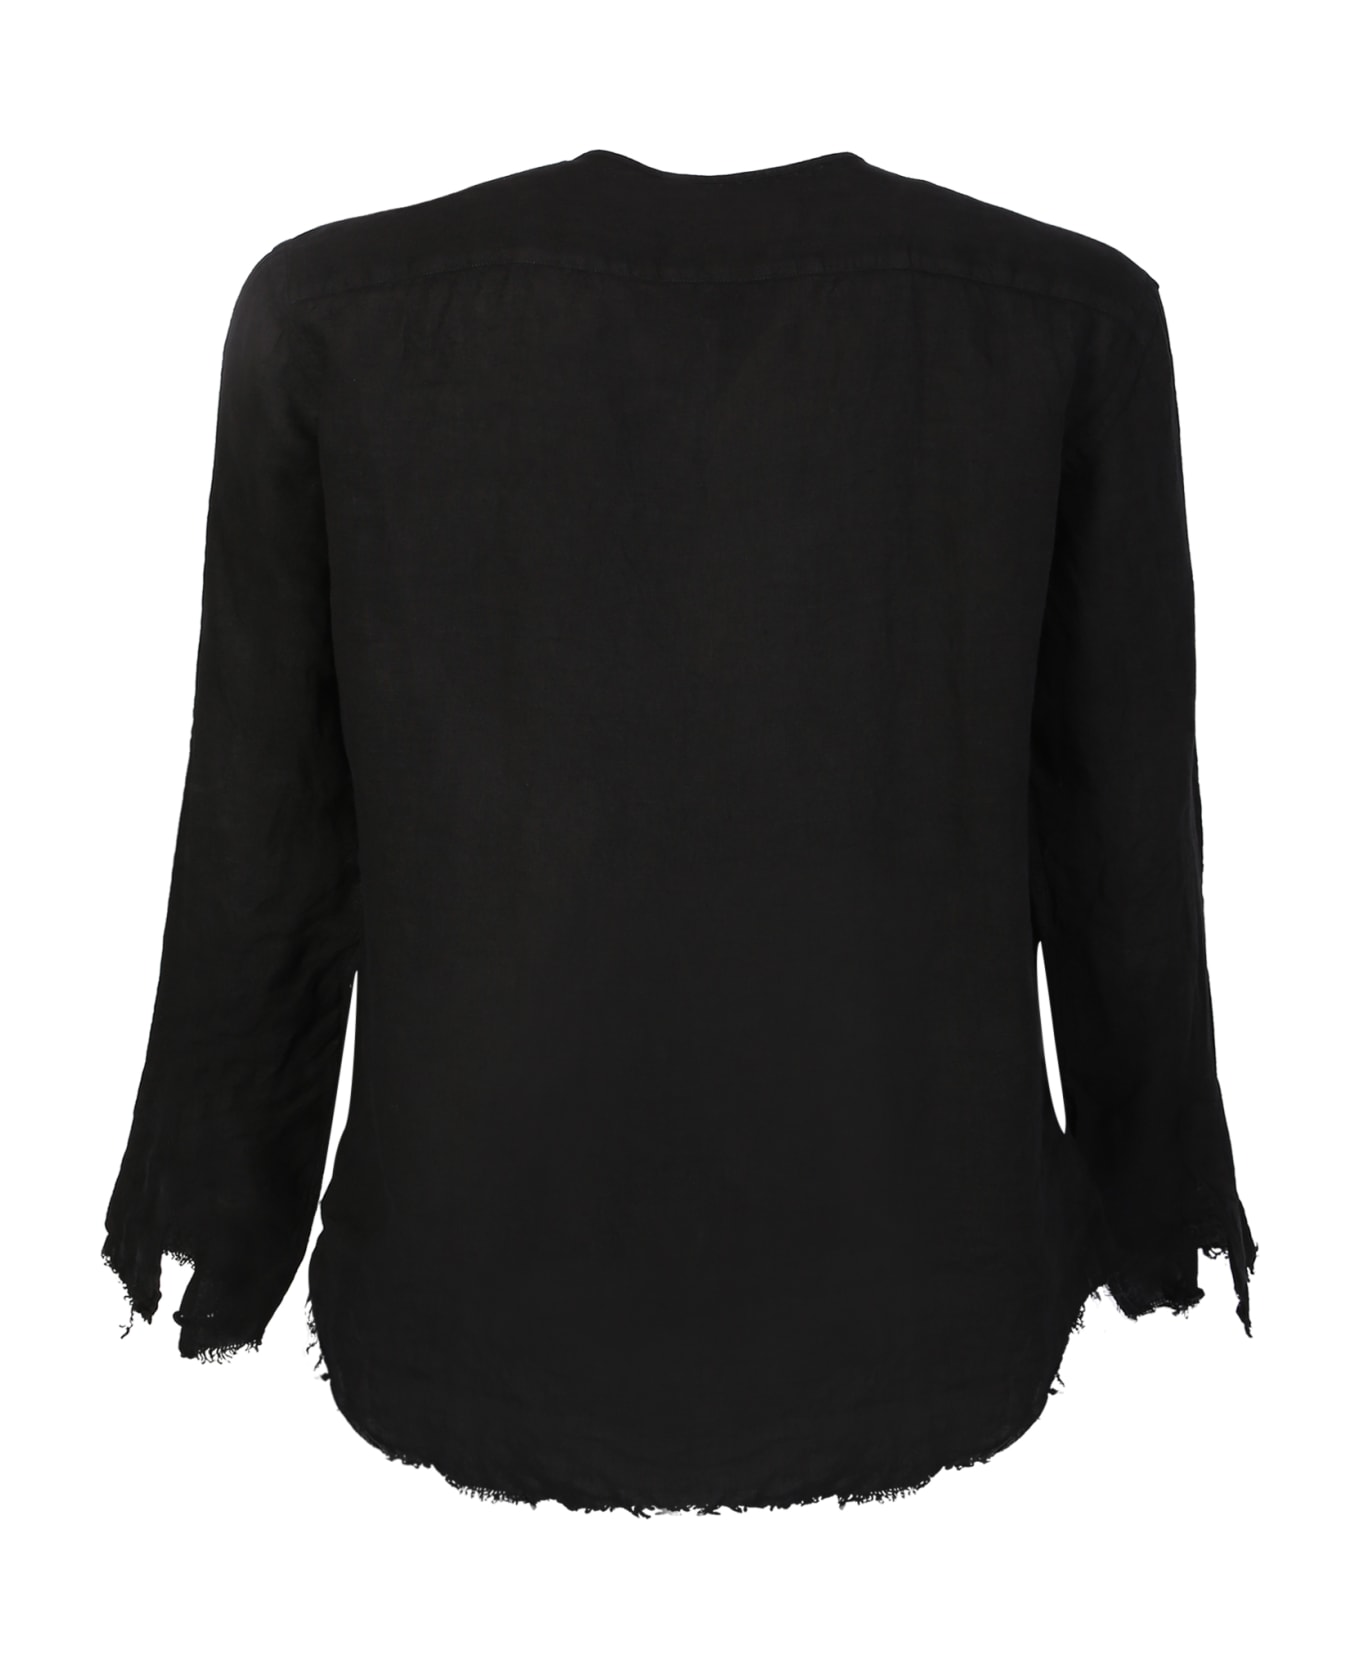 costumein Frayed Edges Black Shirt - Black シャツ